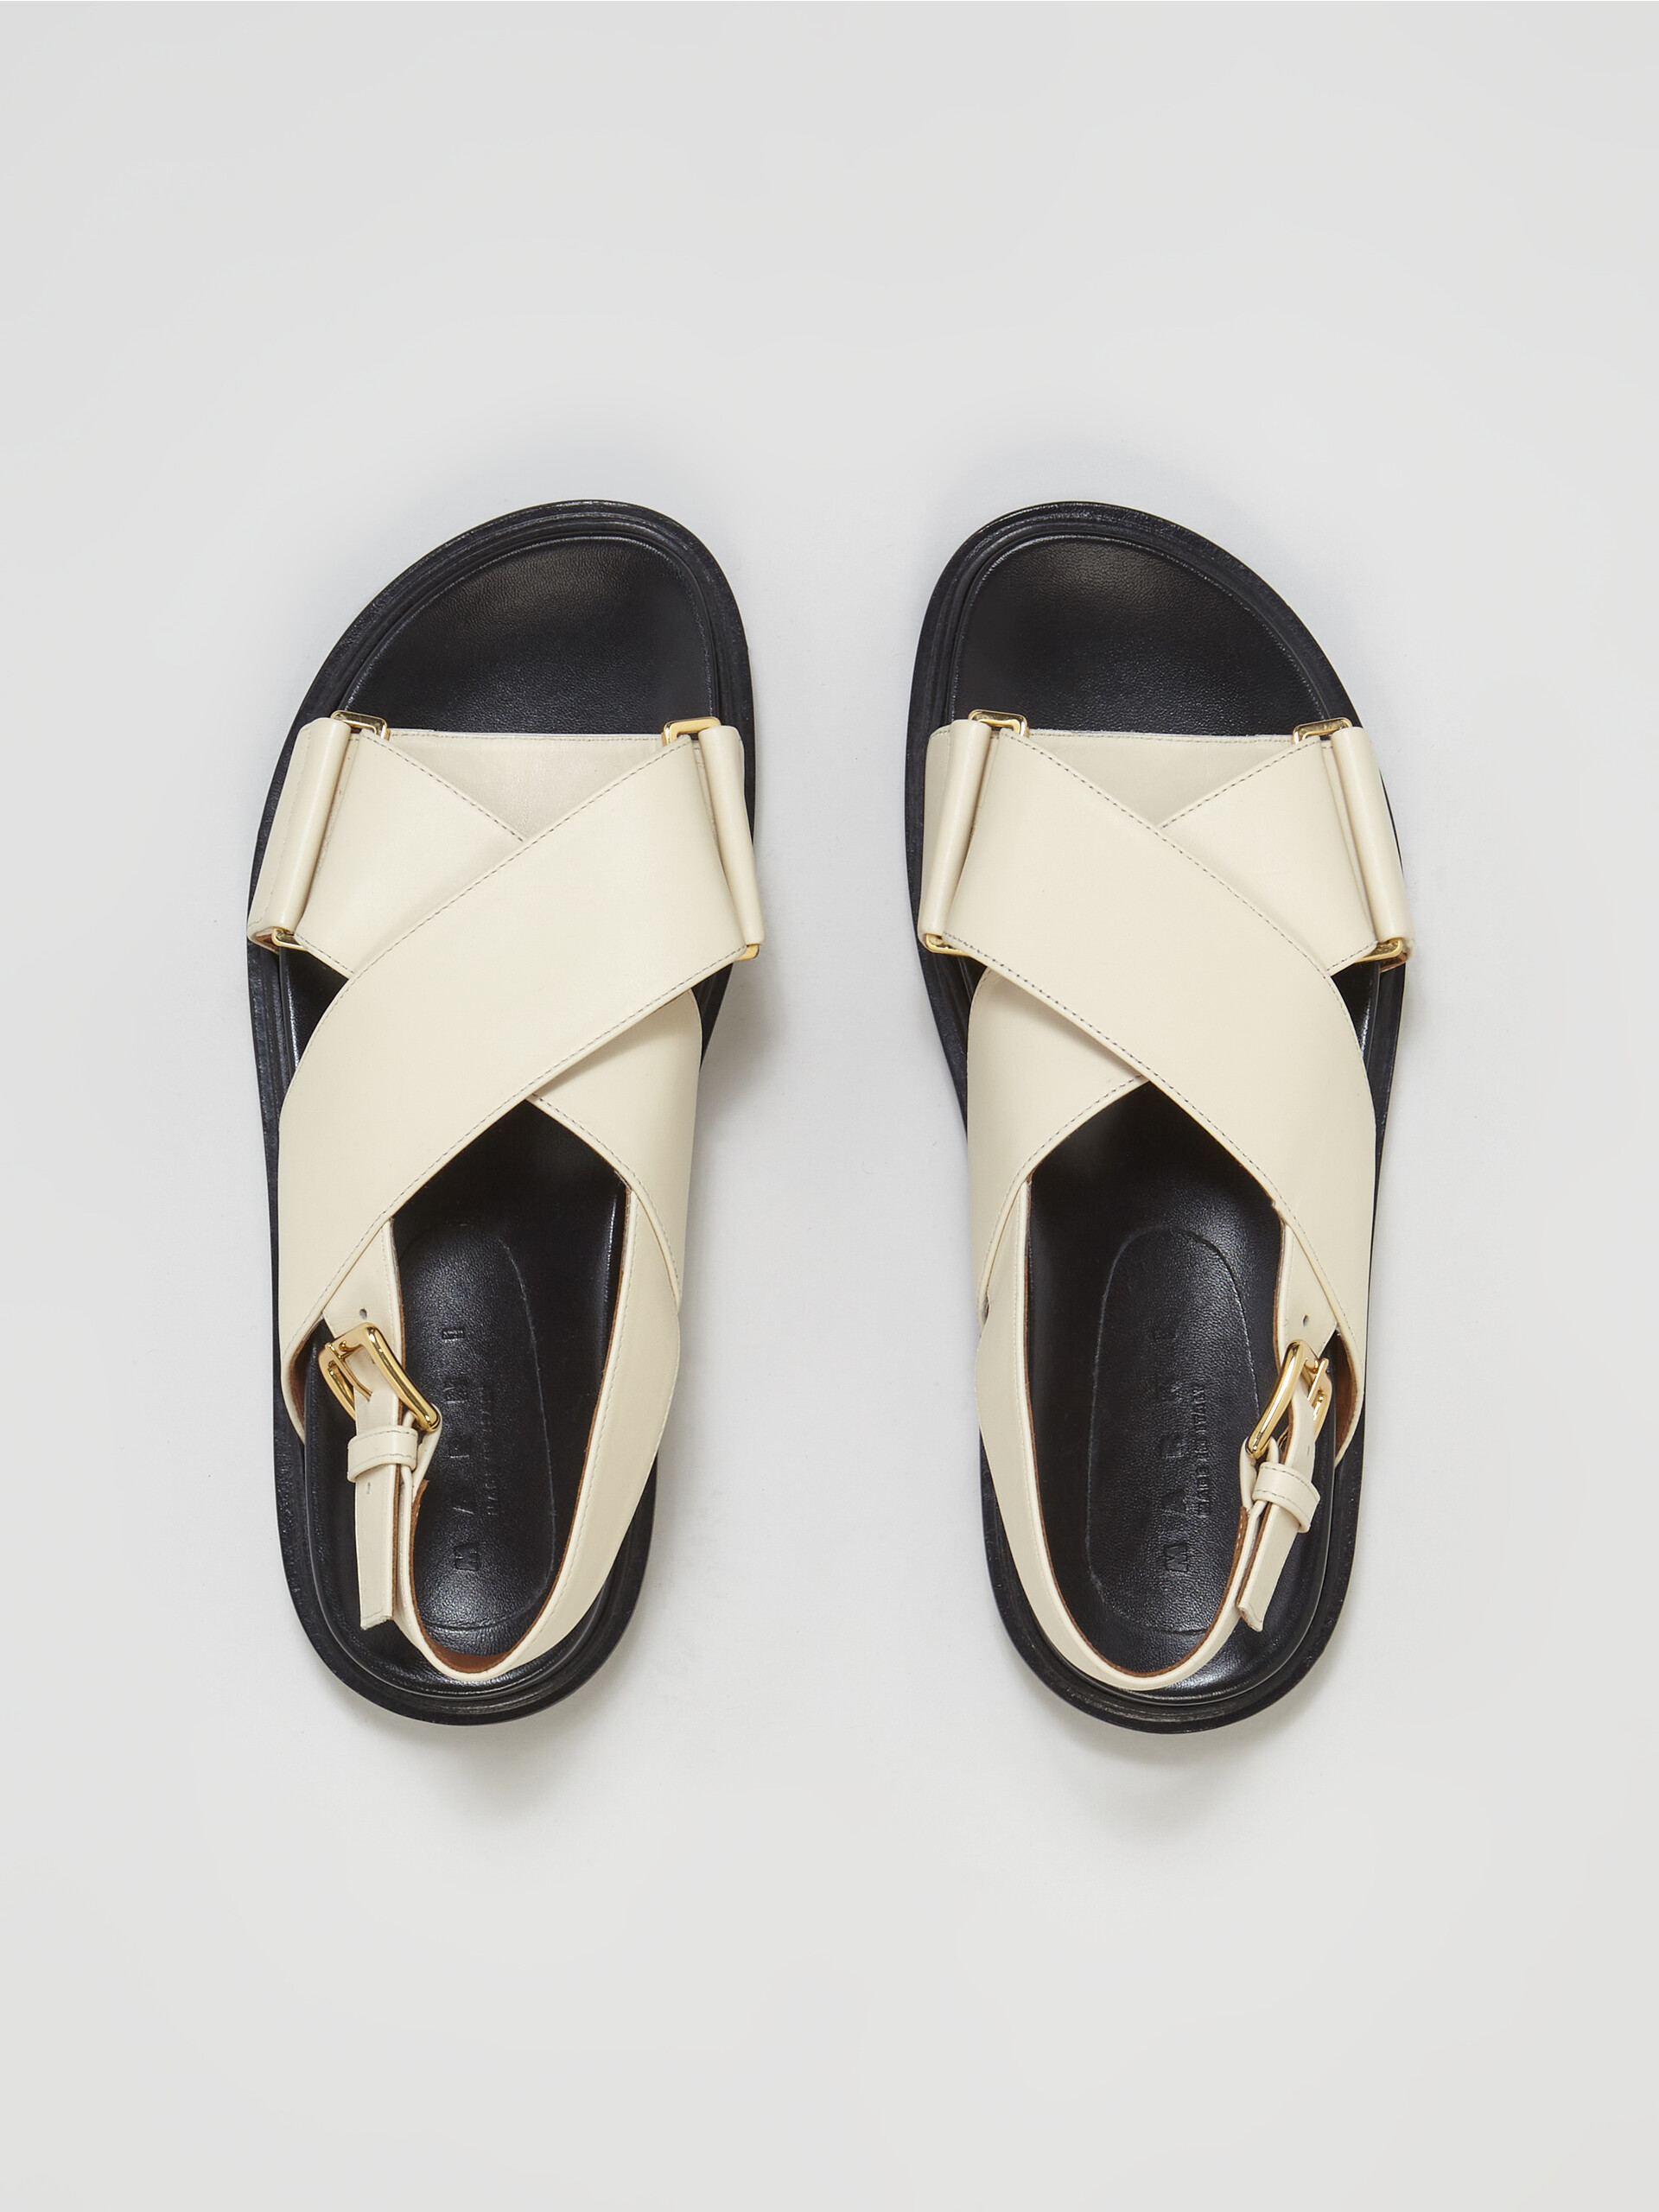 White leather Fussbett - Sandals - Image 4